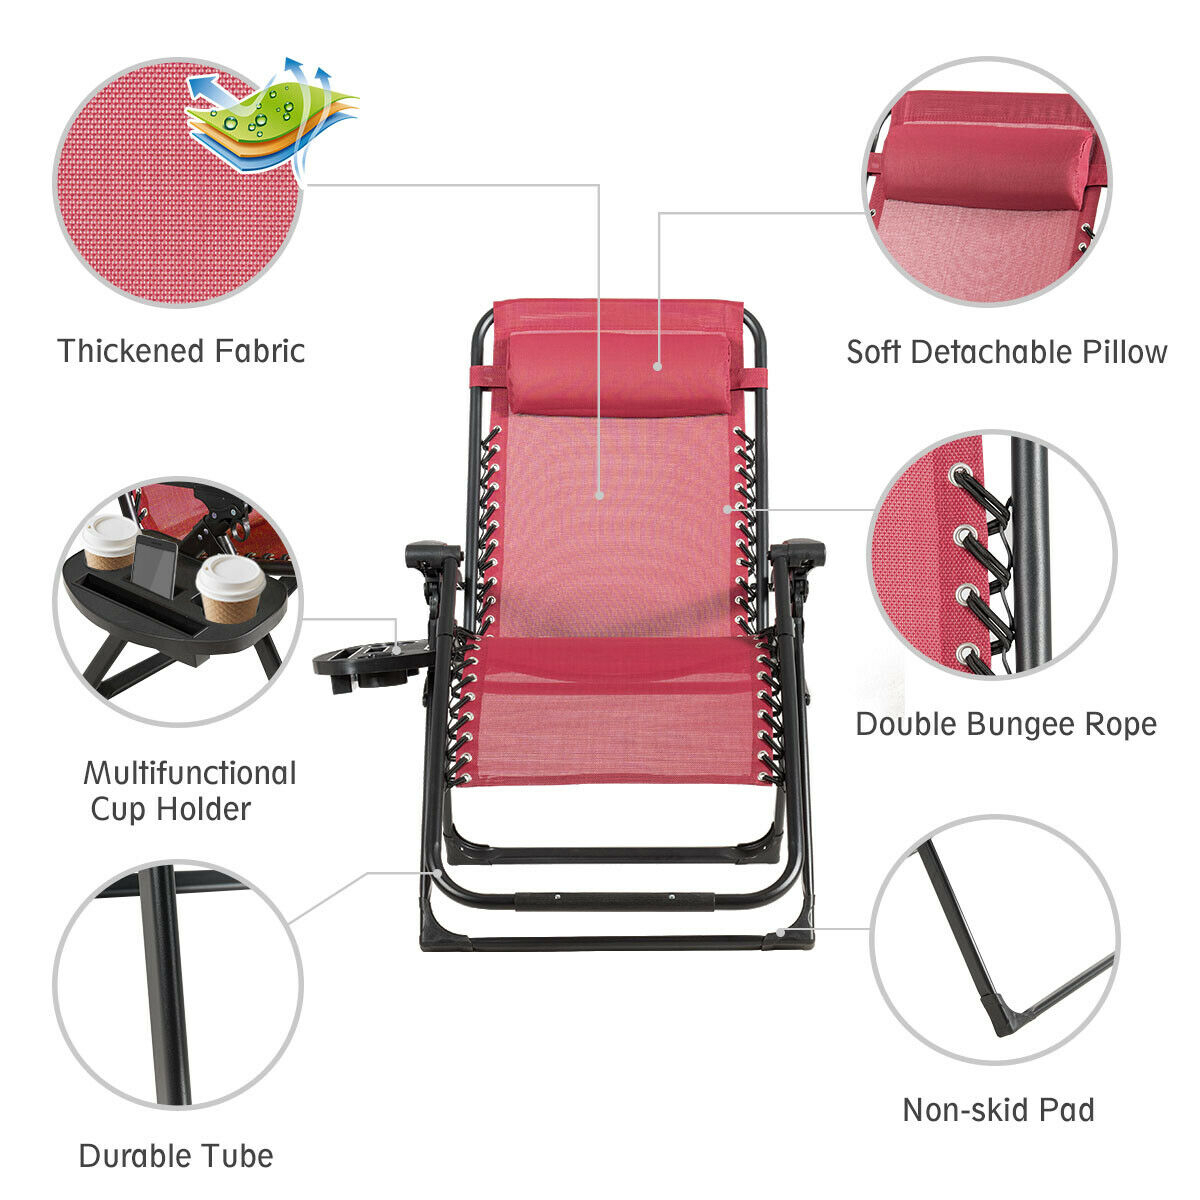 2PCS Folding Zero Gravity Lounge Chair Recliner W/ Cup Holder Pillow - Beige